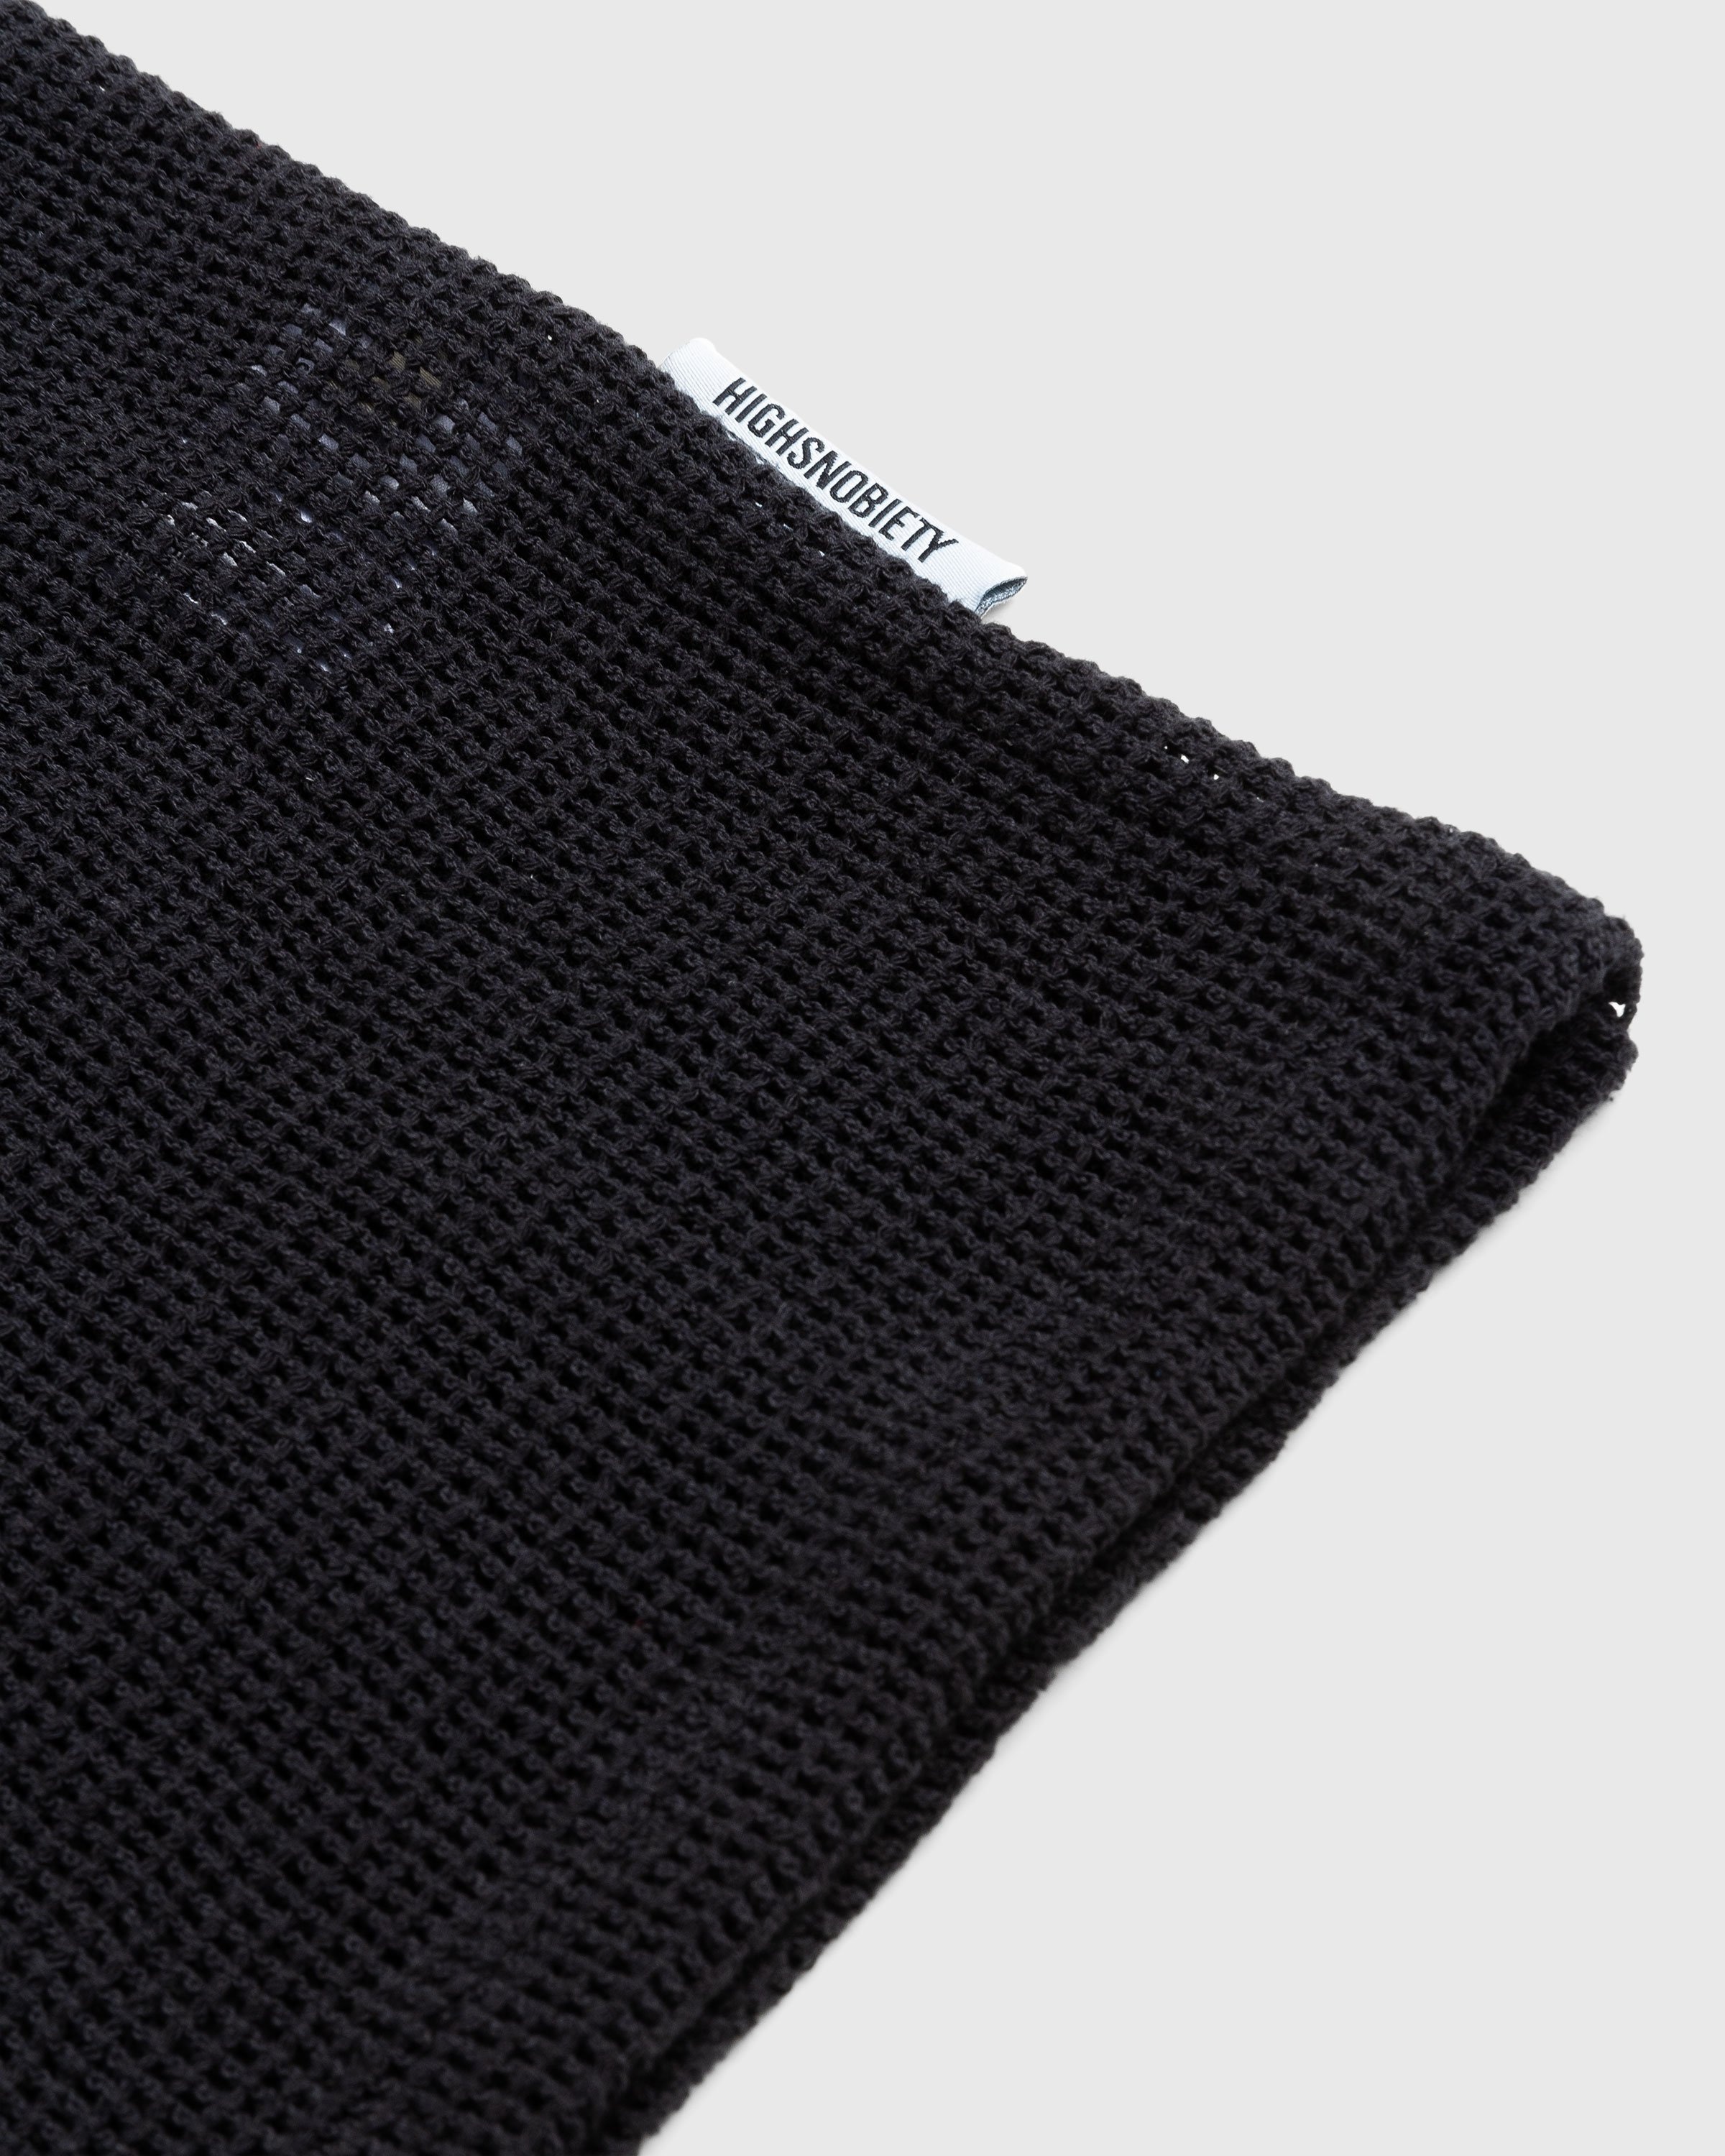 Highsnobiety – Cotton Mesh Knit Tank Top Black - Tops - Black - Image 7